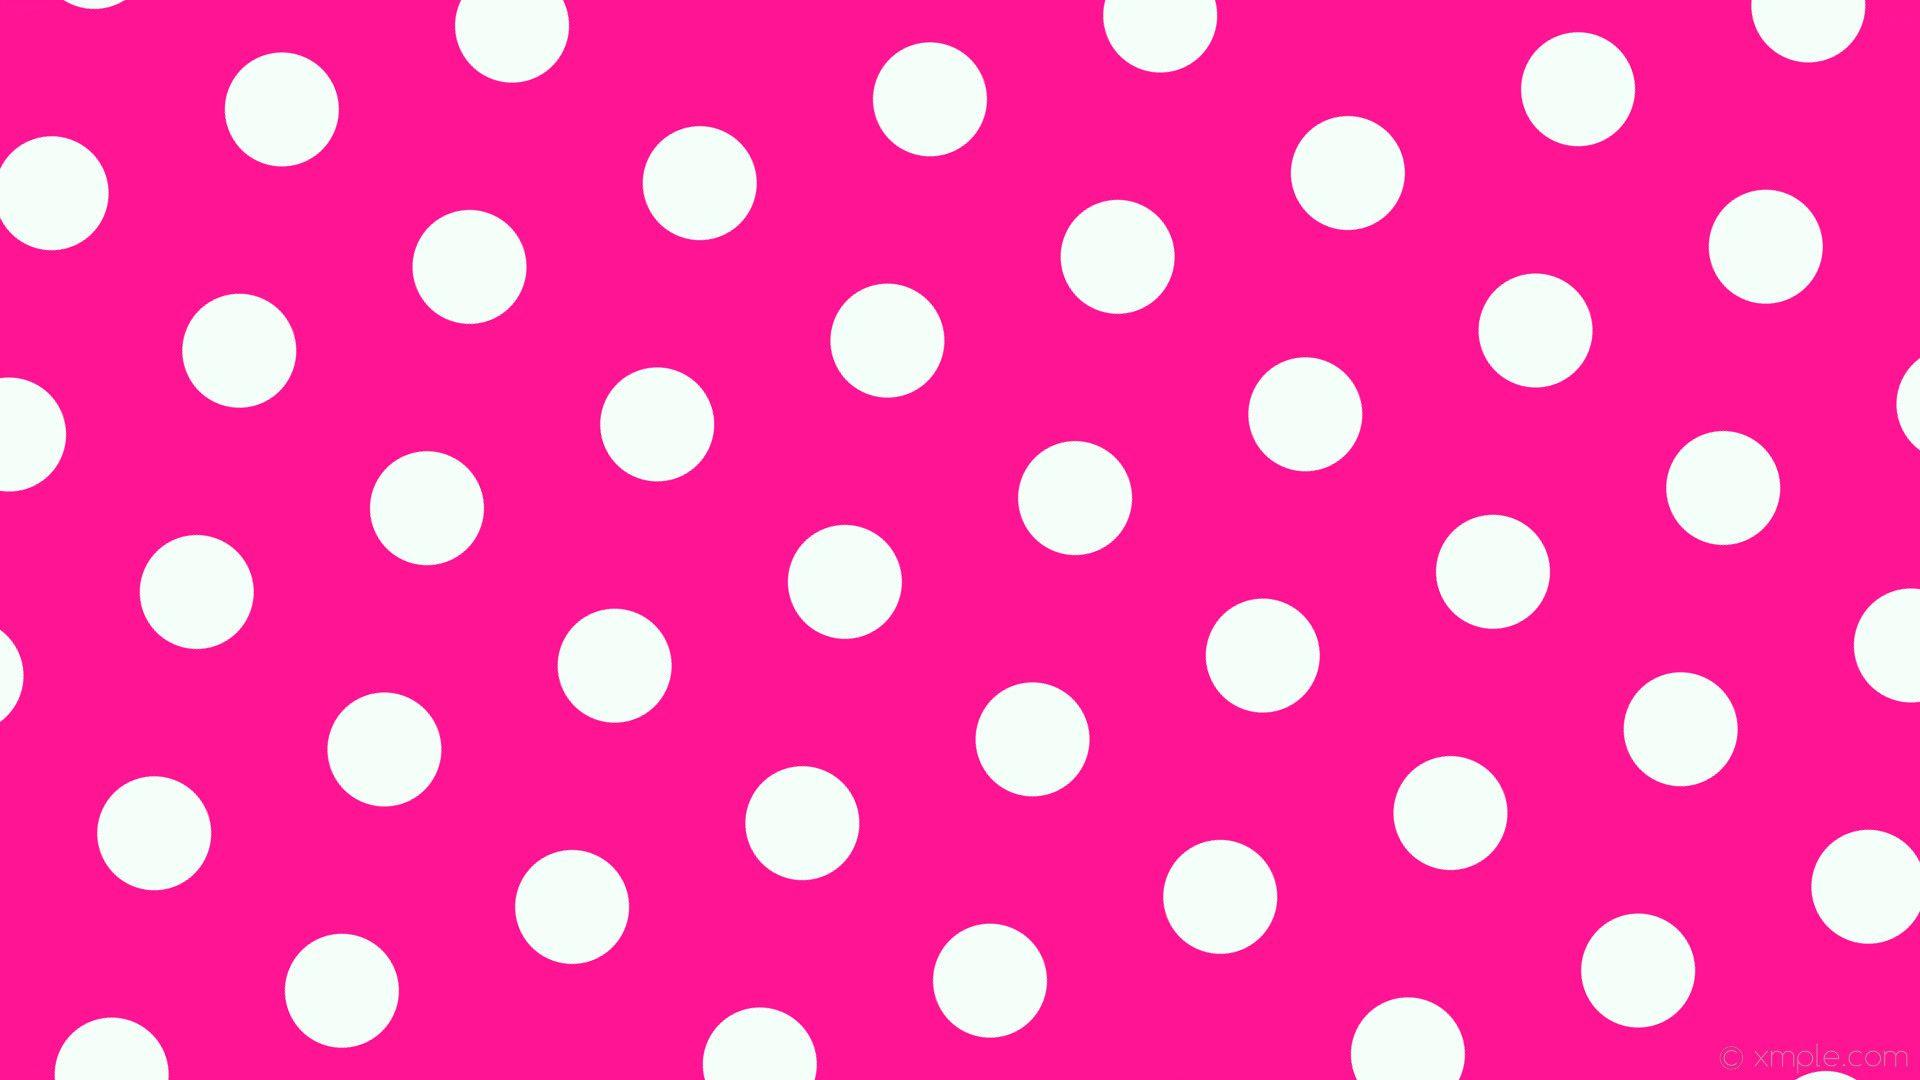 Polka Dot Phone Wallpapers - Top Free Polka Dot Phone Backgrounds